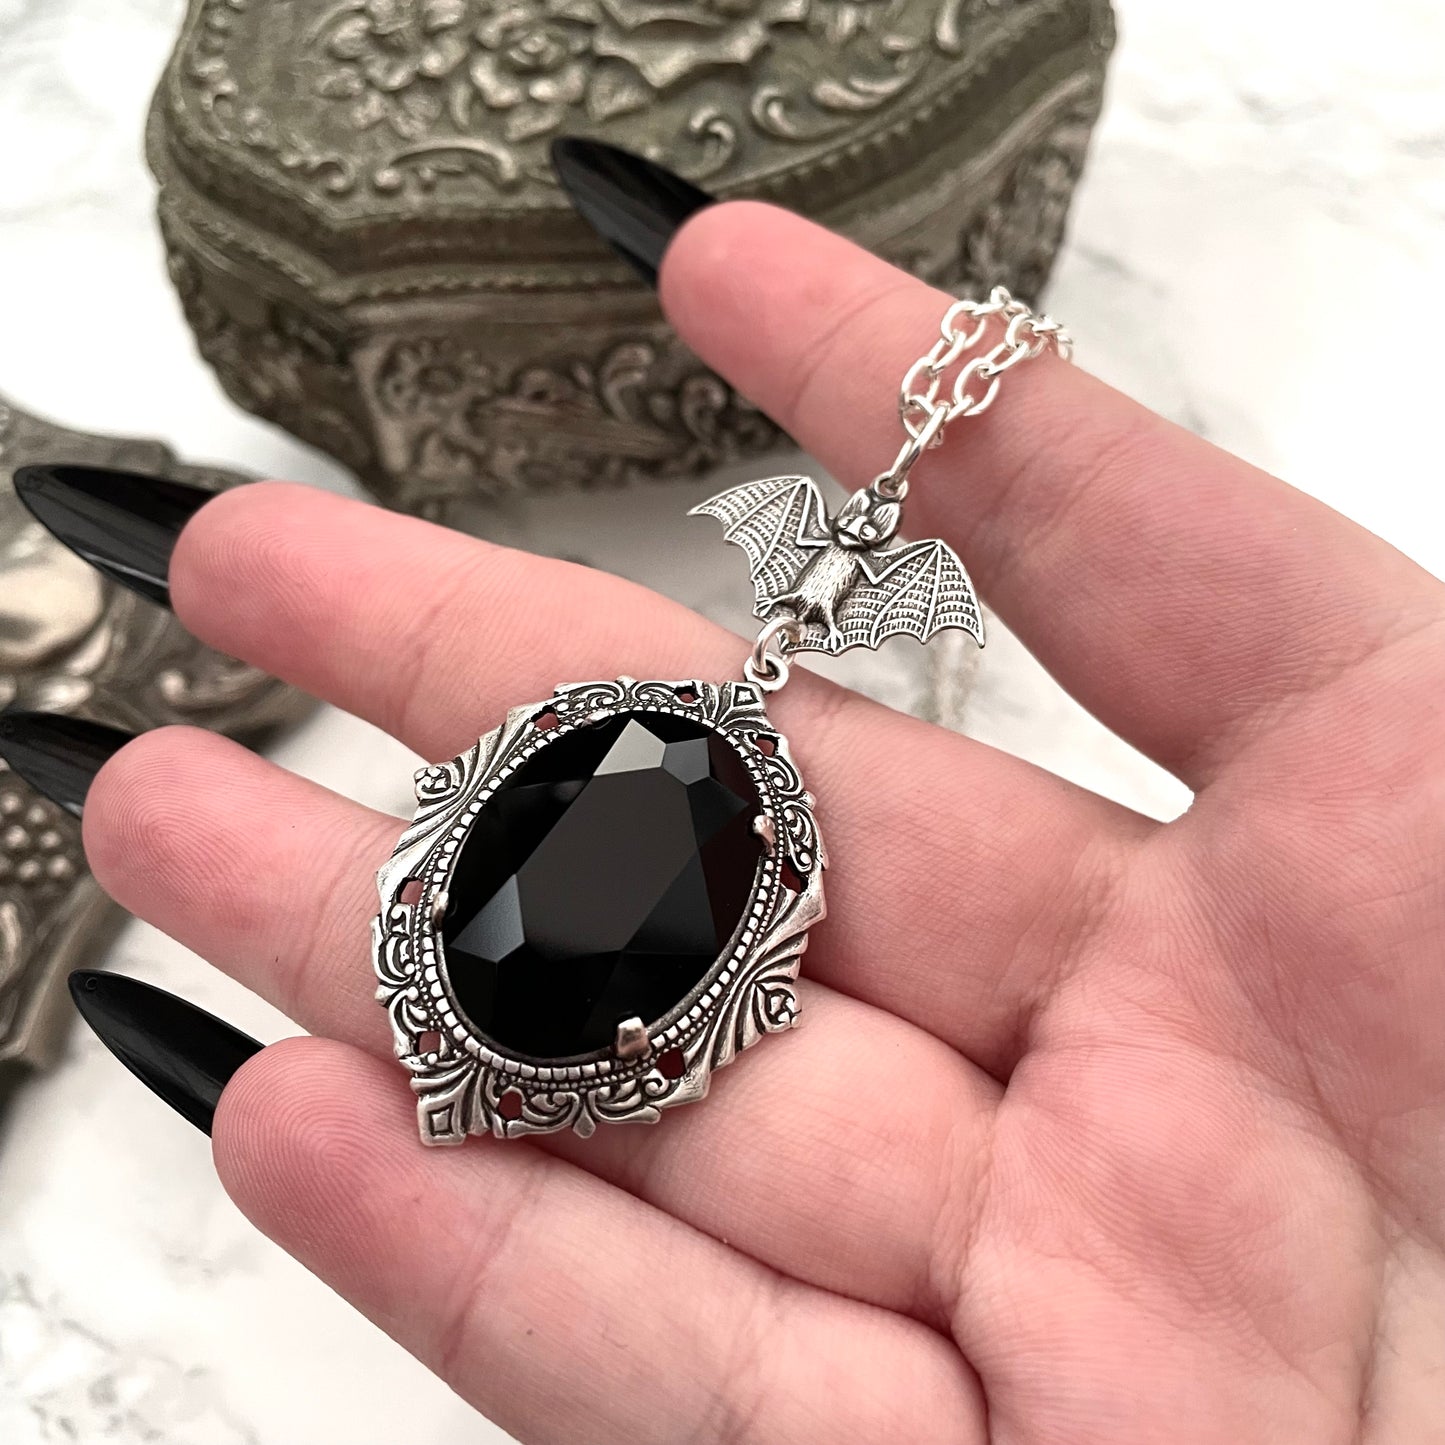 'Crypt' Necklace (Death Black)